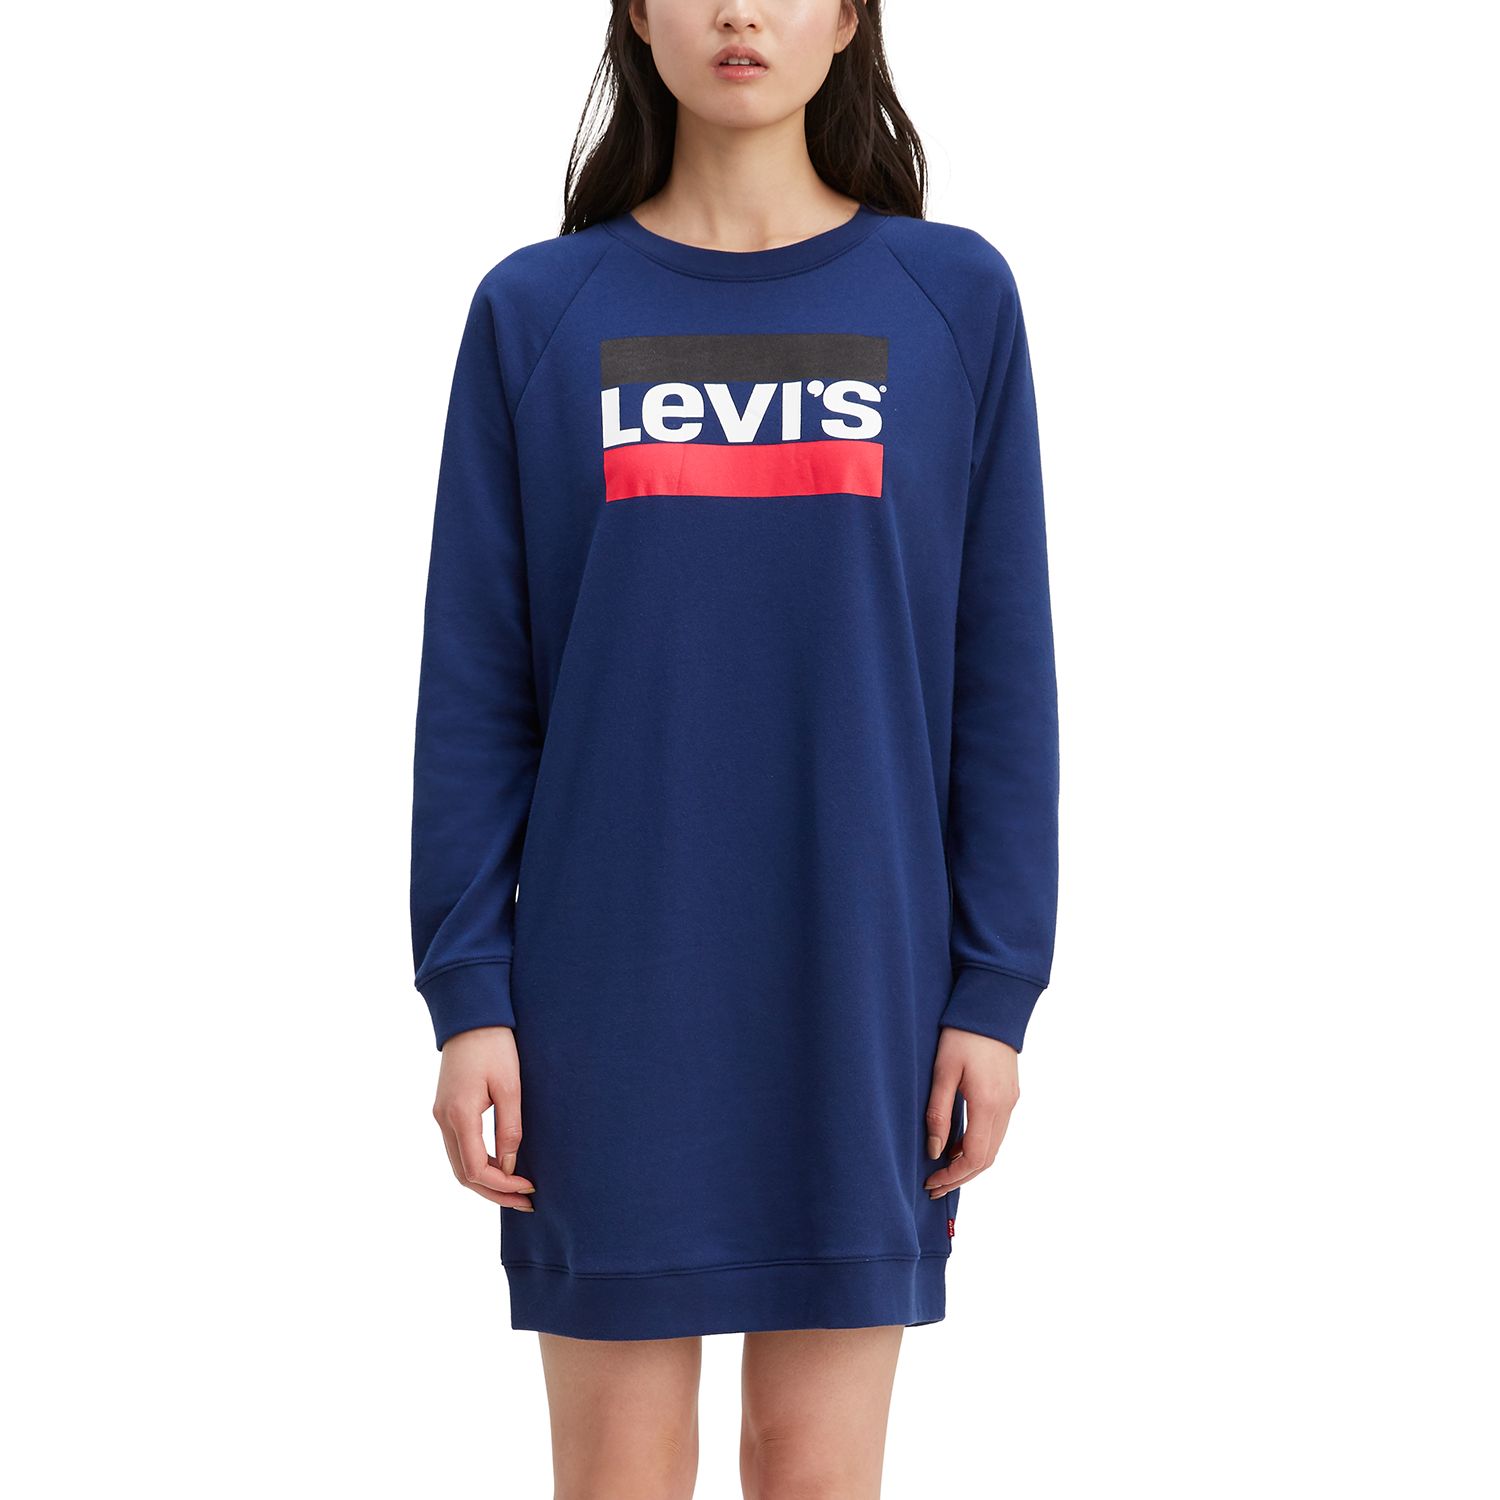 levi sweater women's